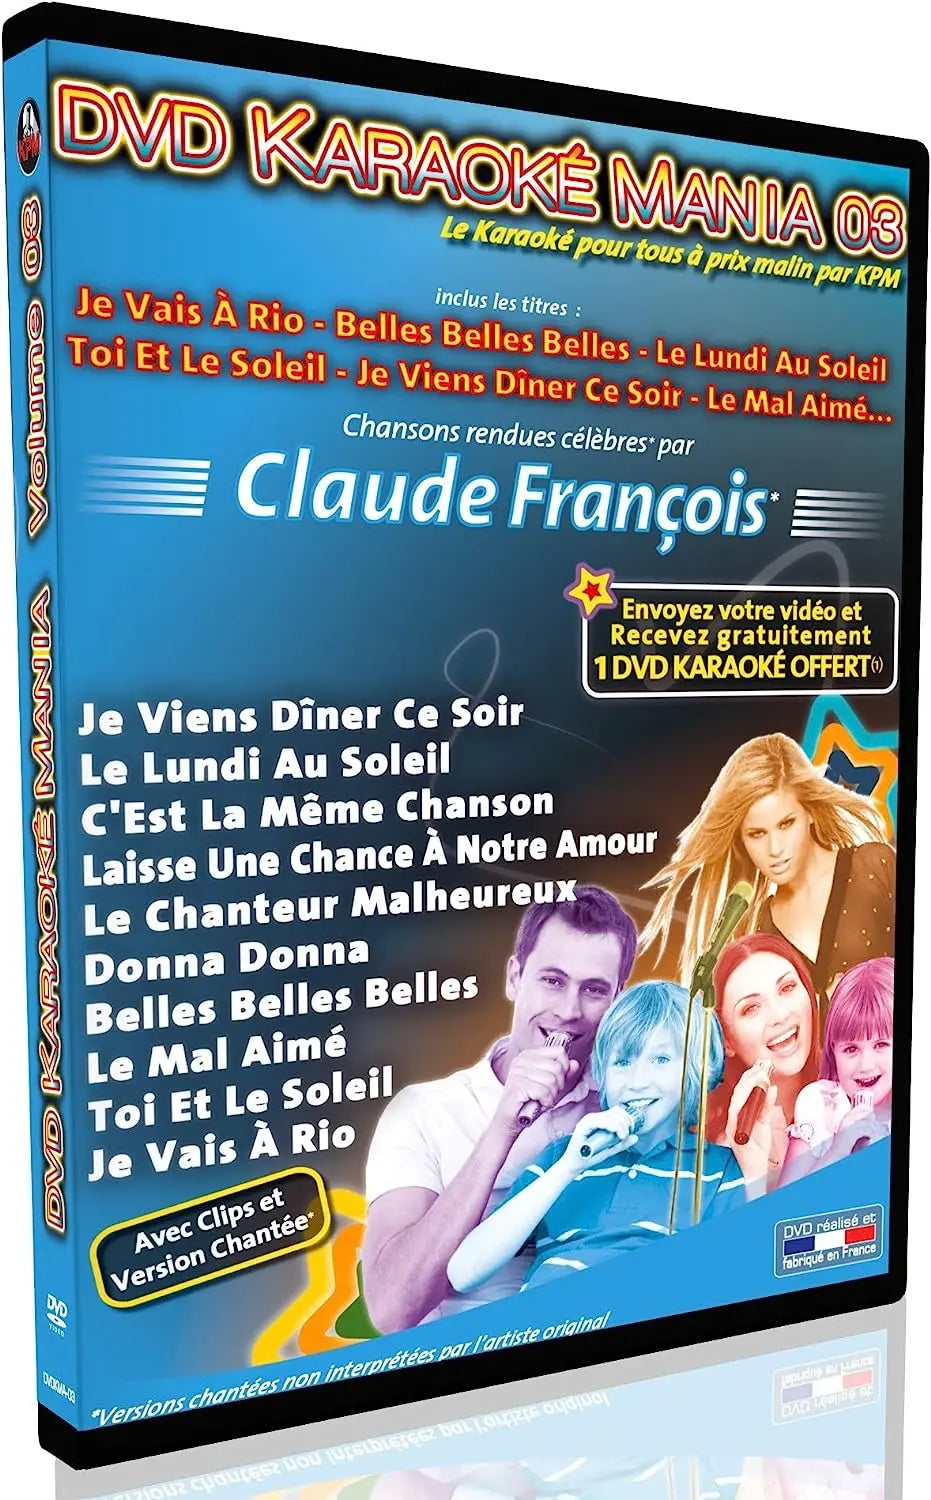 DVD Karaoké Mania Vol.03 "Claude François DVD